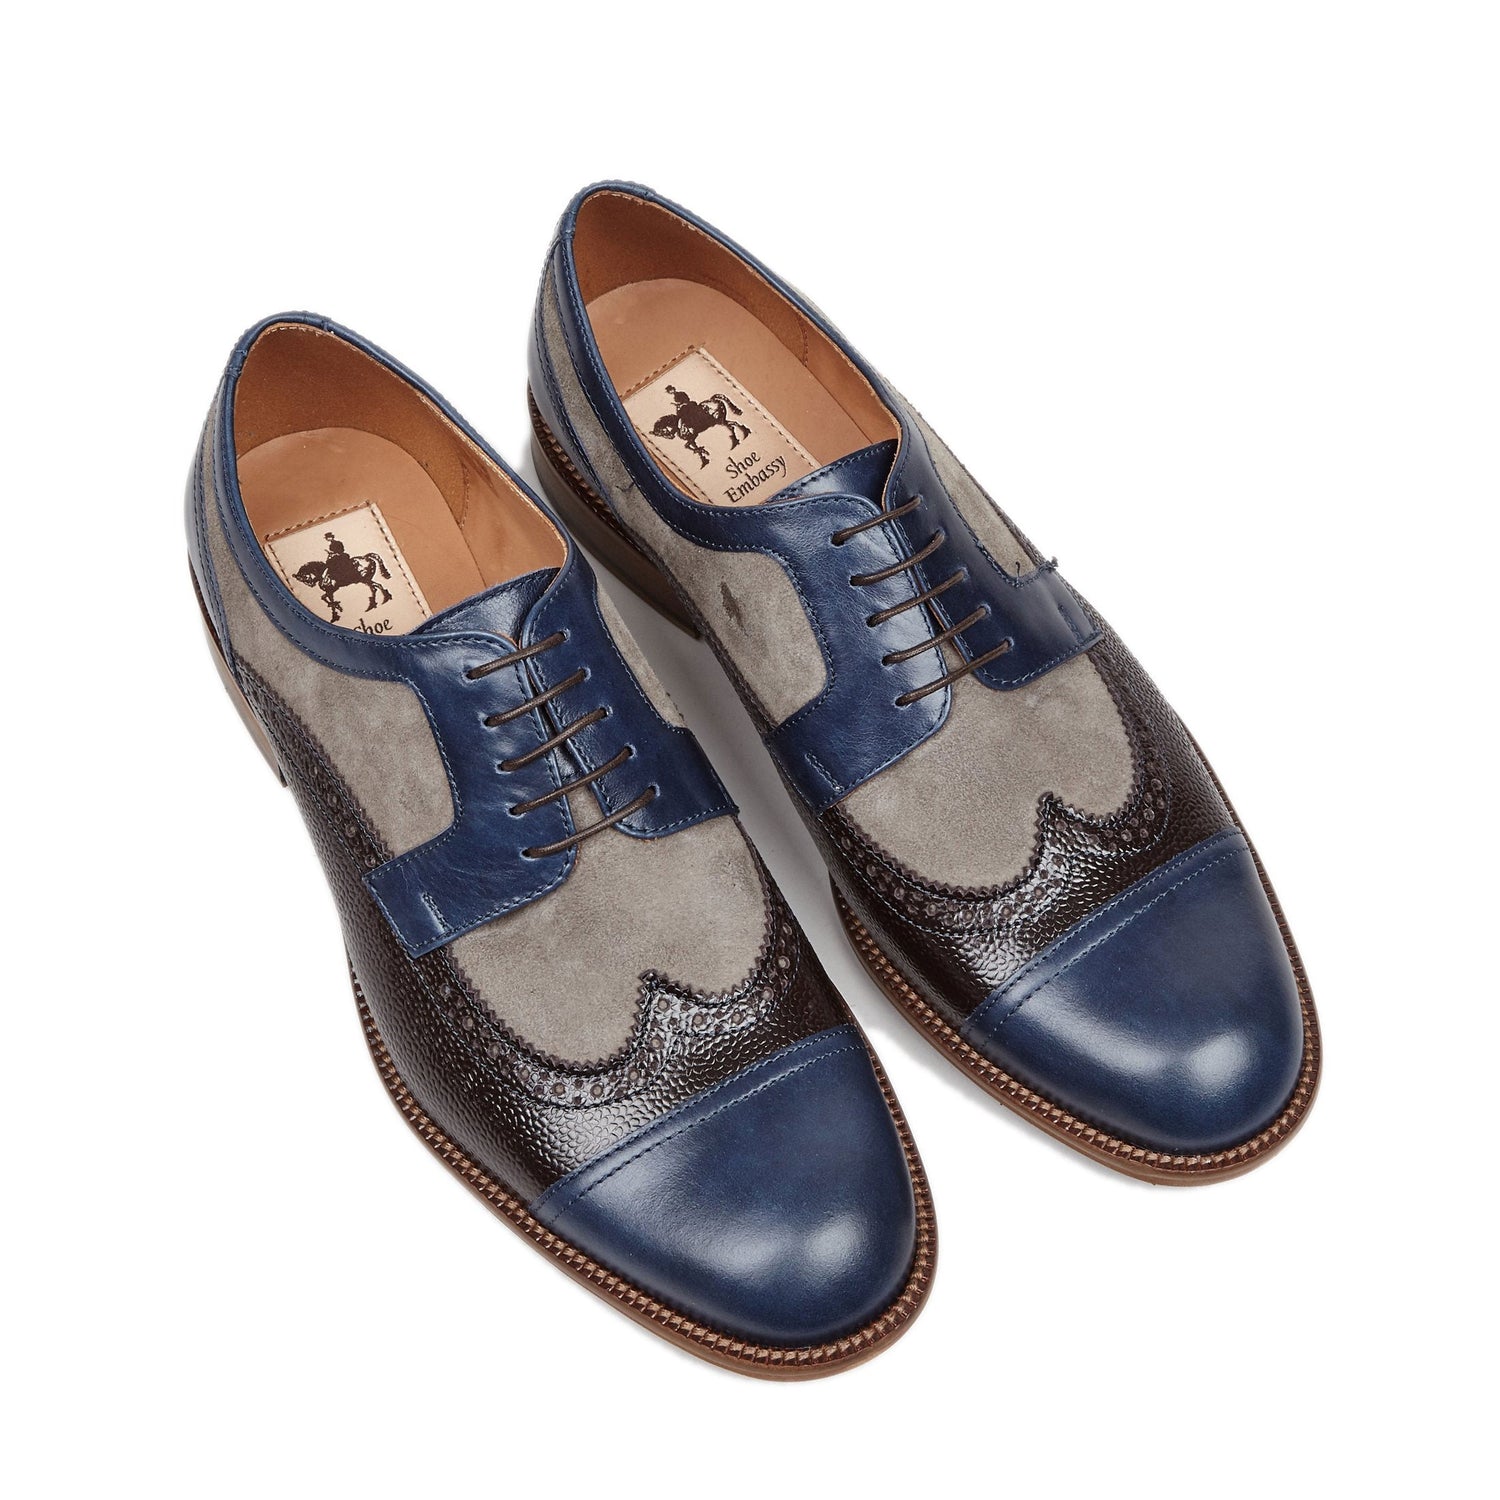 Orlando - Navy, Grey, Brown Shoes Embassy London 